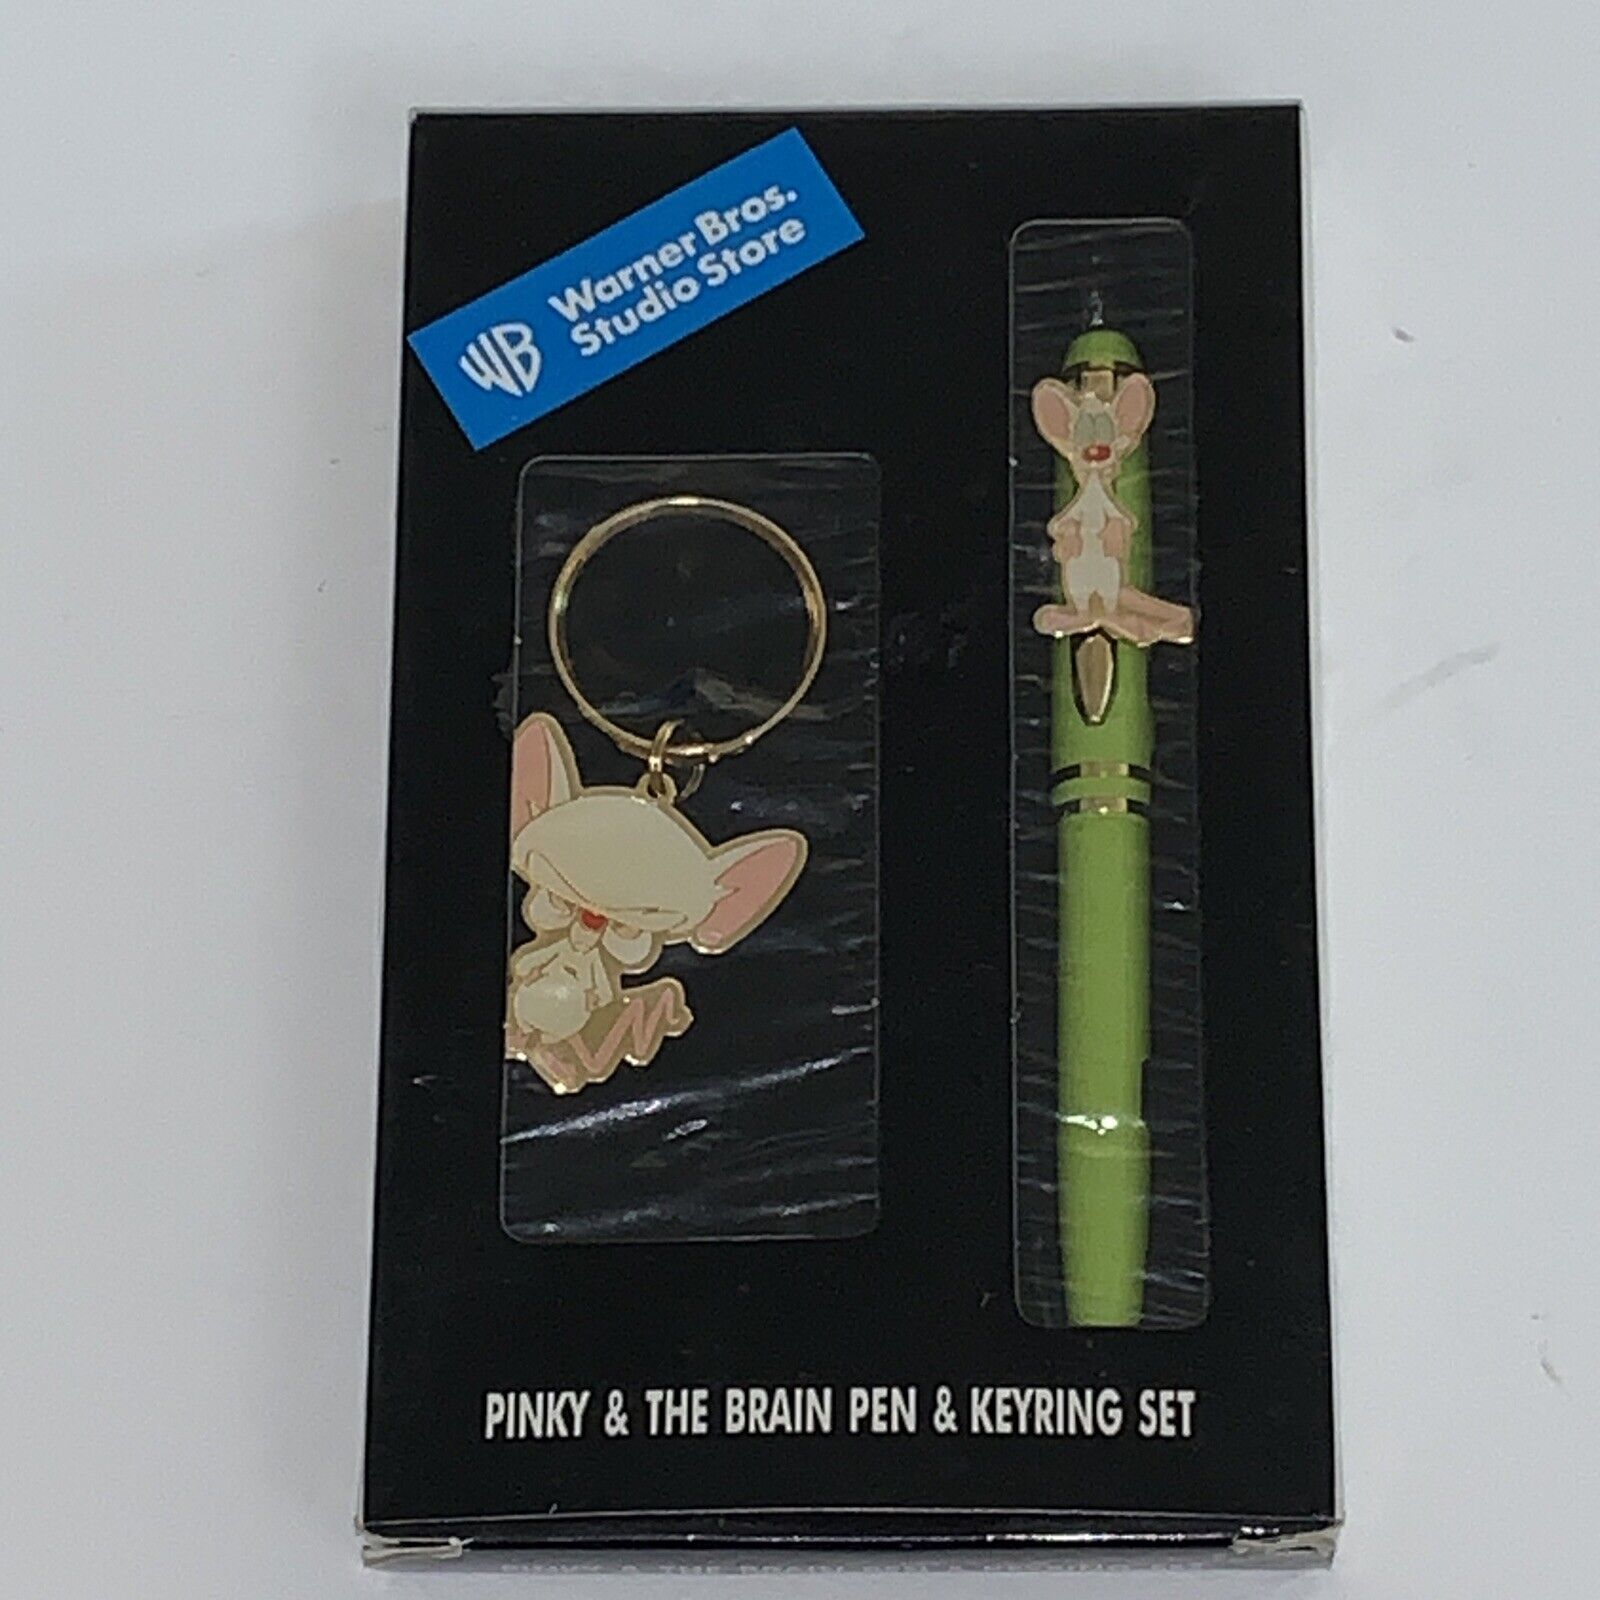 1999 Warner Brothers Studio Store Exclusive Pinky & The Brain Pen / Keychain Set